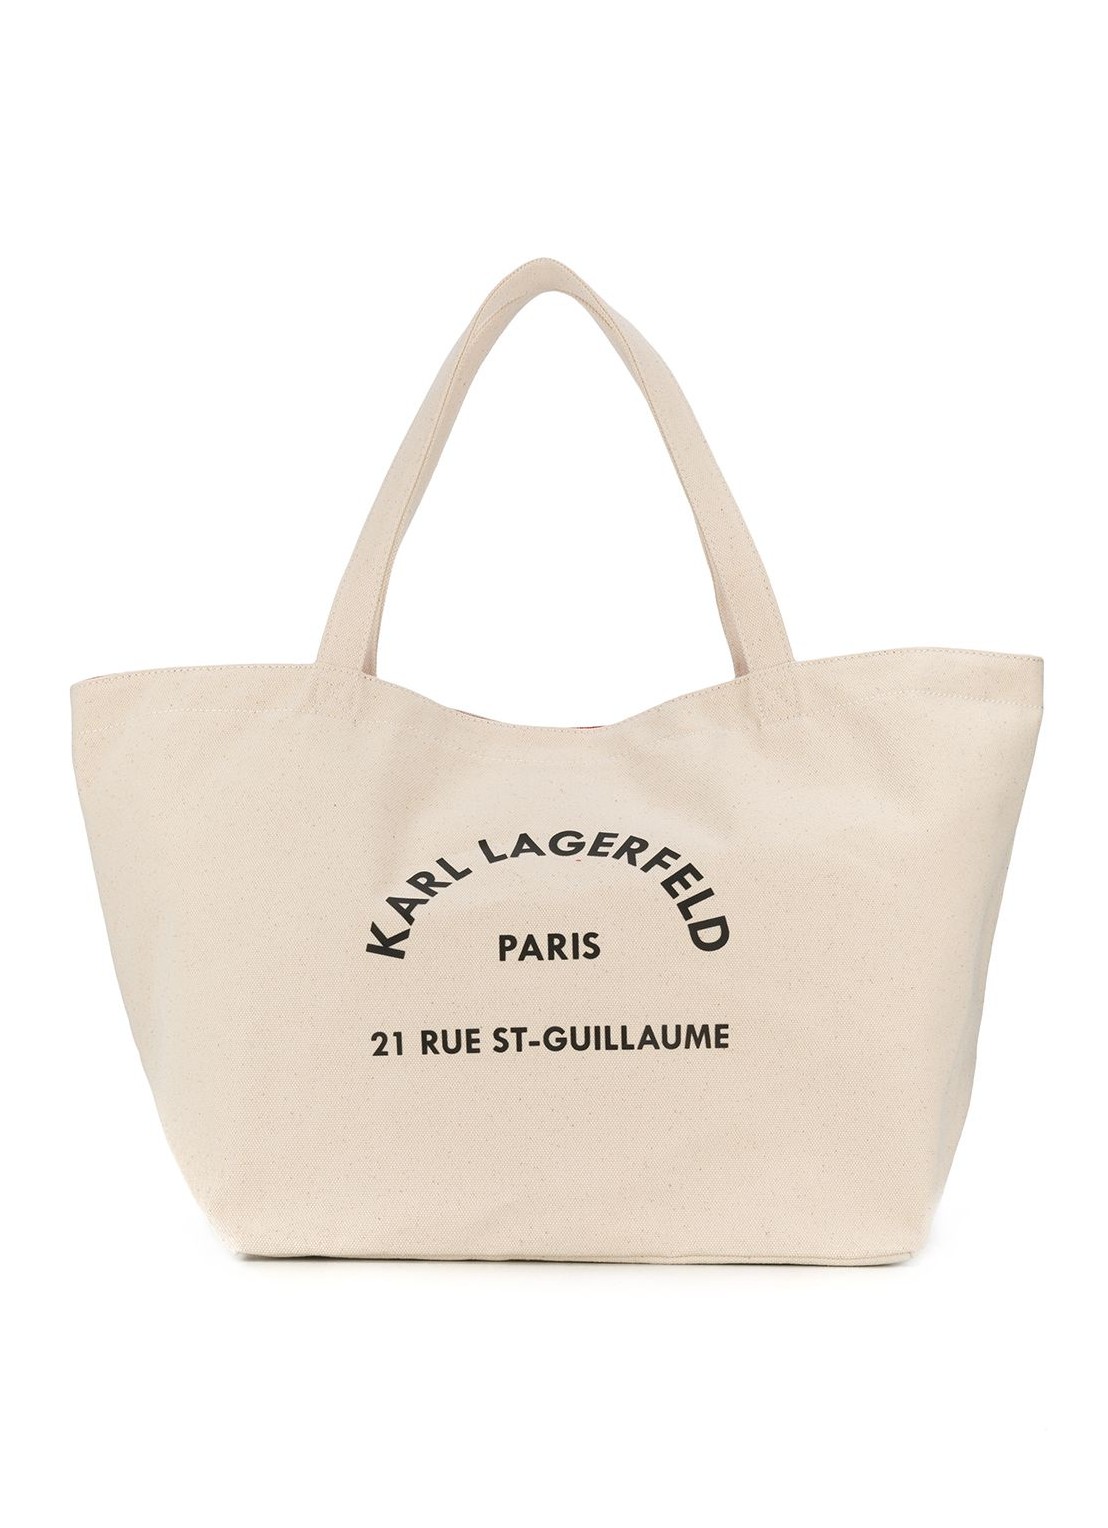 Handbag karl lagerfeld handbag woman k/rue st guillaume canvas tote 201w3138 a106 talla blanco
 